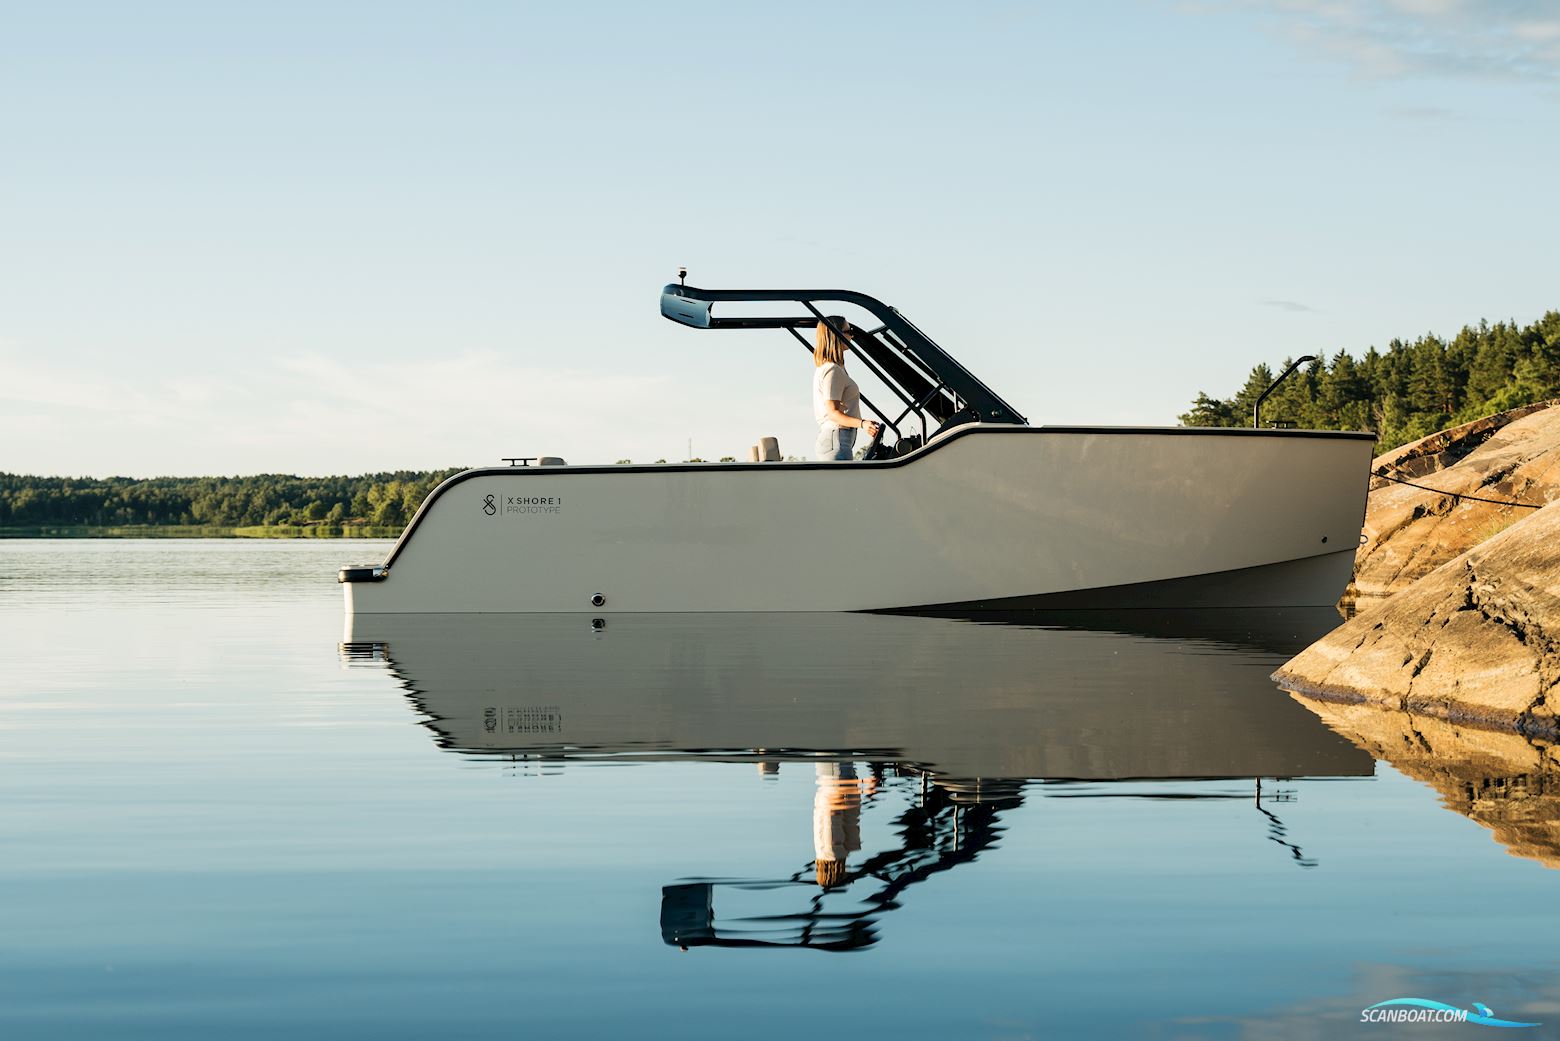 X-Shore 1 - 100% Elektrisch Motor boat 2023, with Elektroantrieb 100% engine, Germany